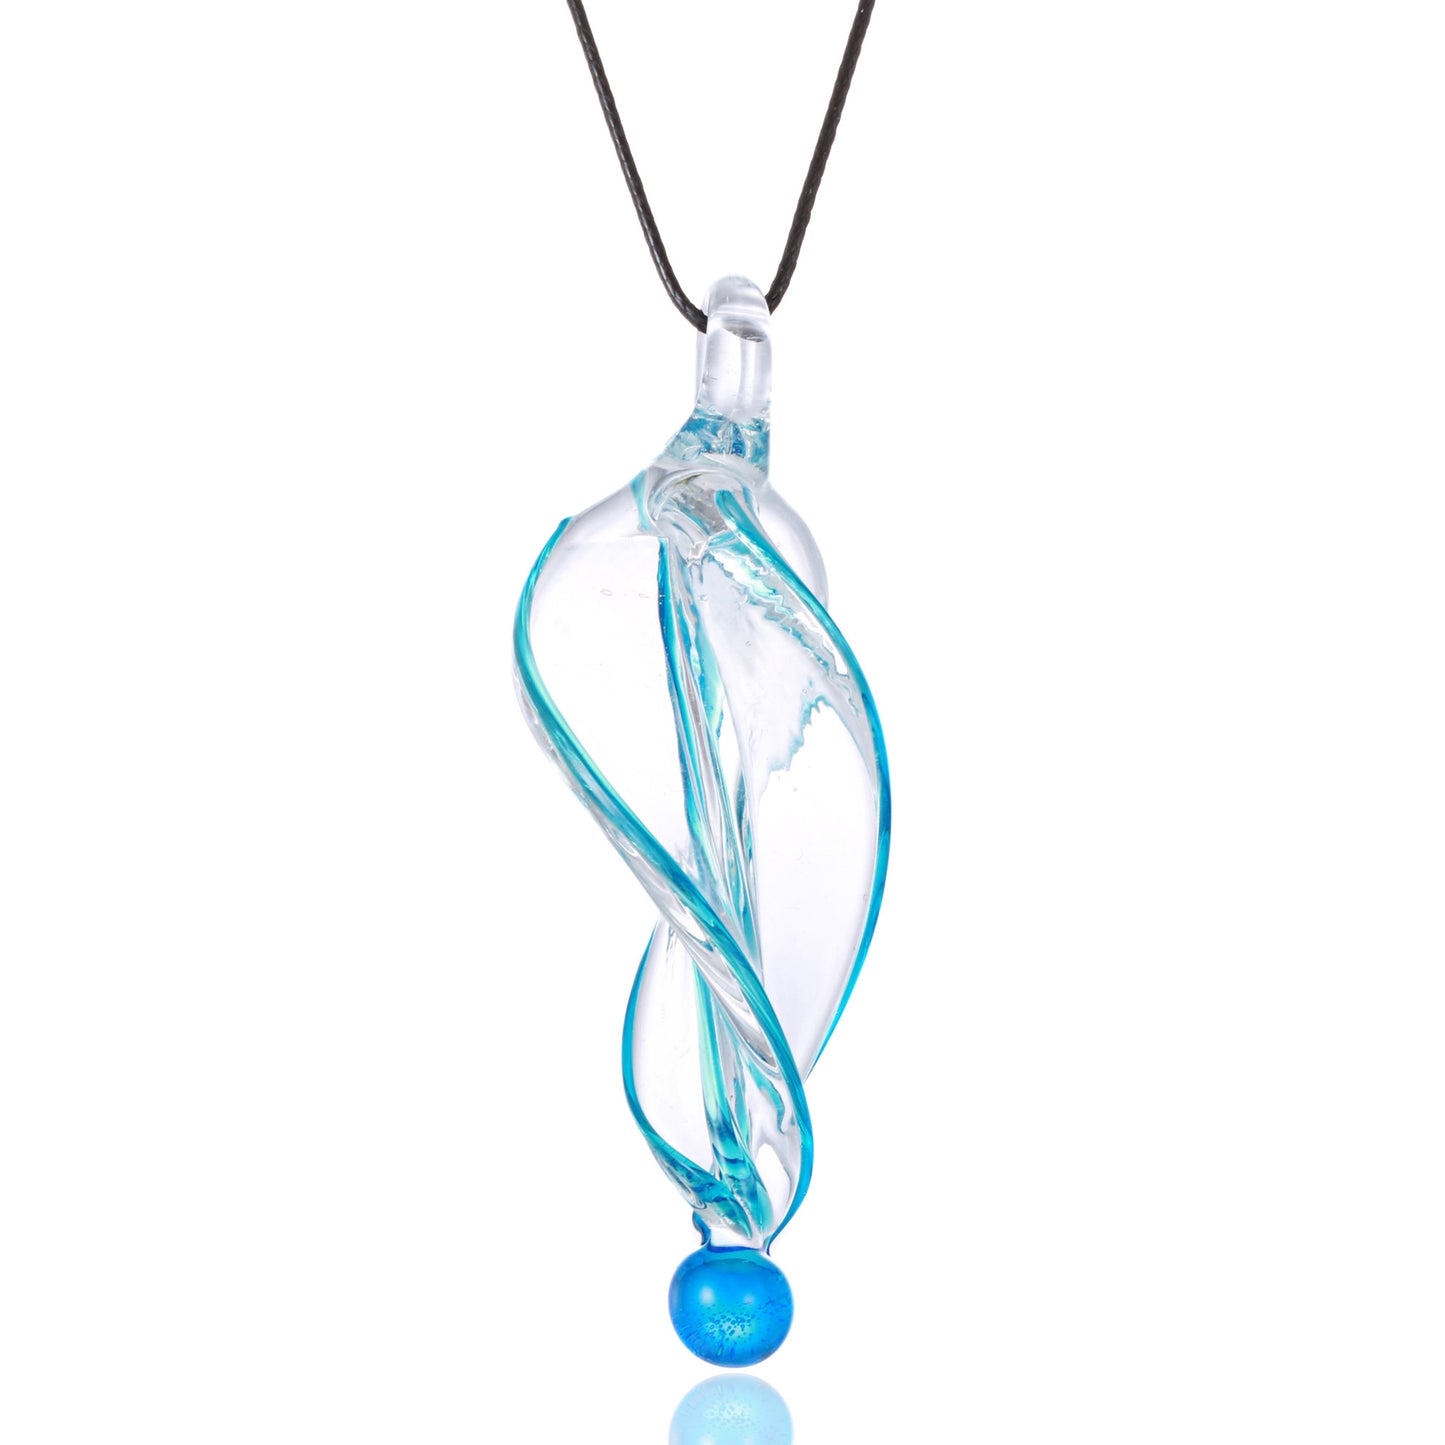 BESHEEK Handmade Murano Inspired Blown Glass Lampwork Art Aqua Blue Tornado Twist Necklace Pendant ? Handcrafted Artisan Hypoallergenic Italian Style Jewelry